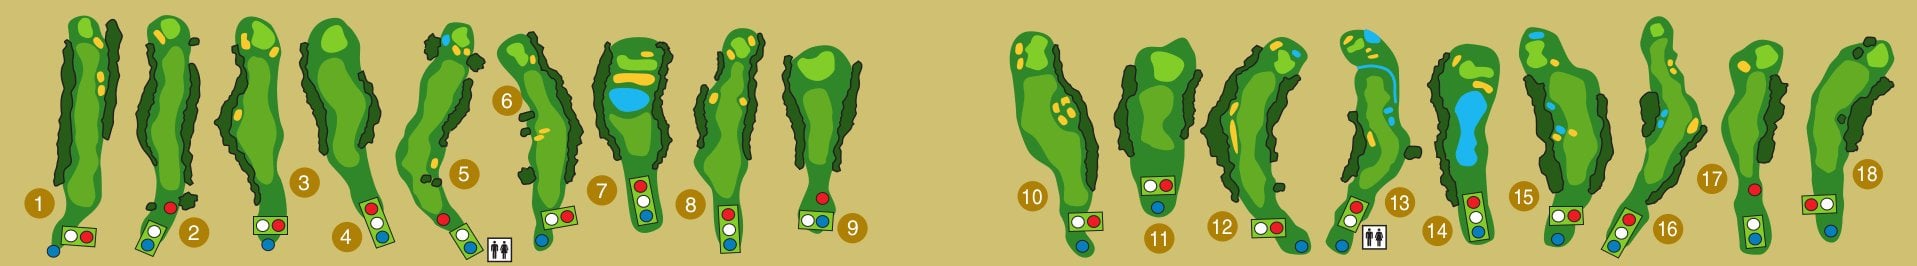 18 golf holes